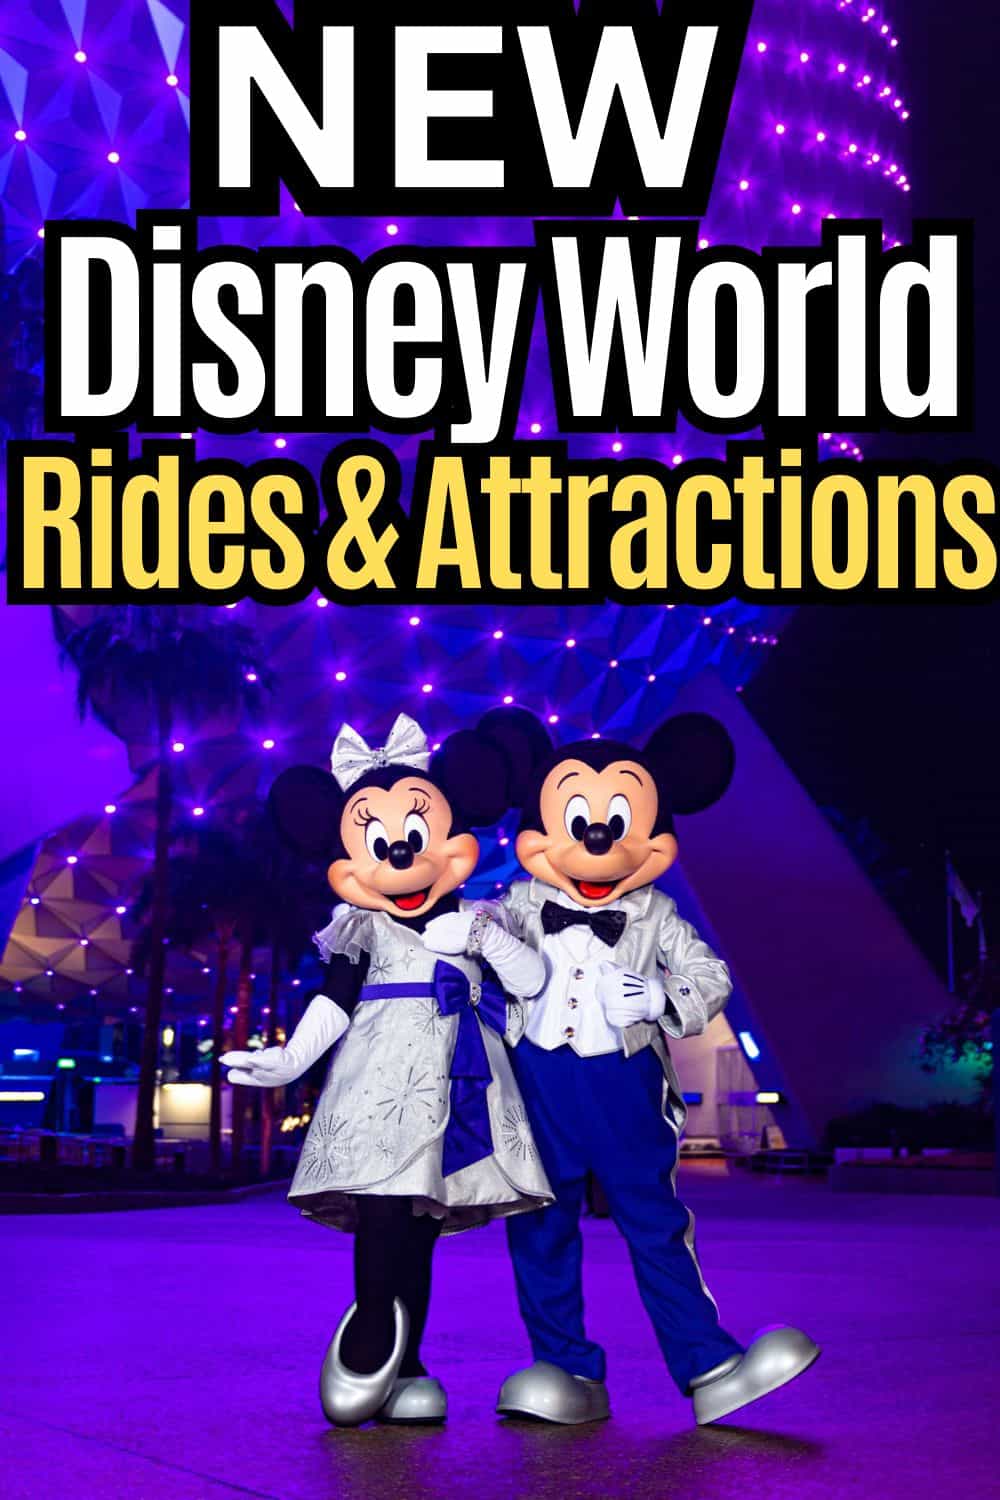 New Disney World Rides & Attractions 